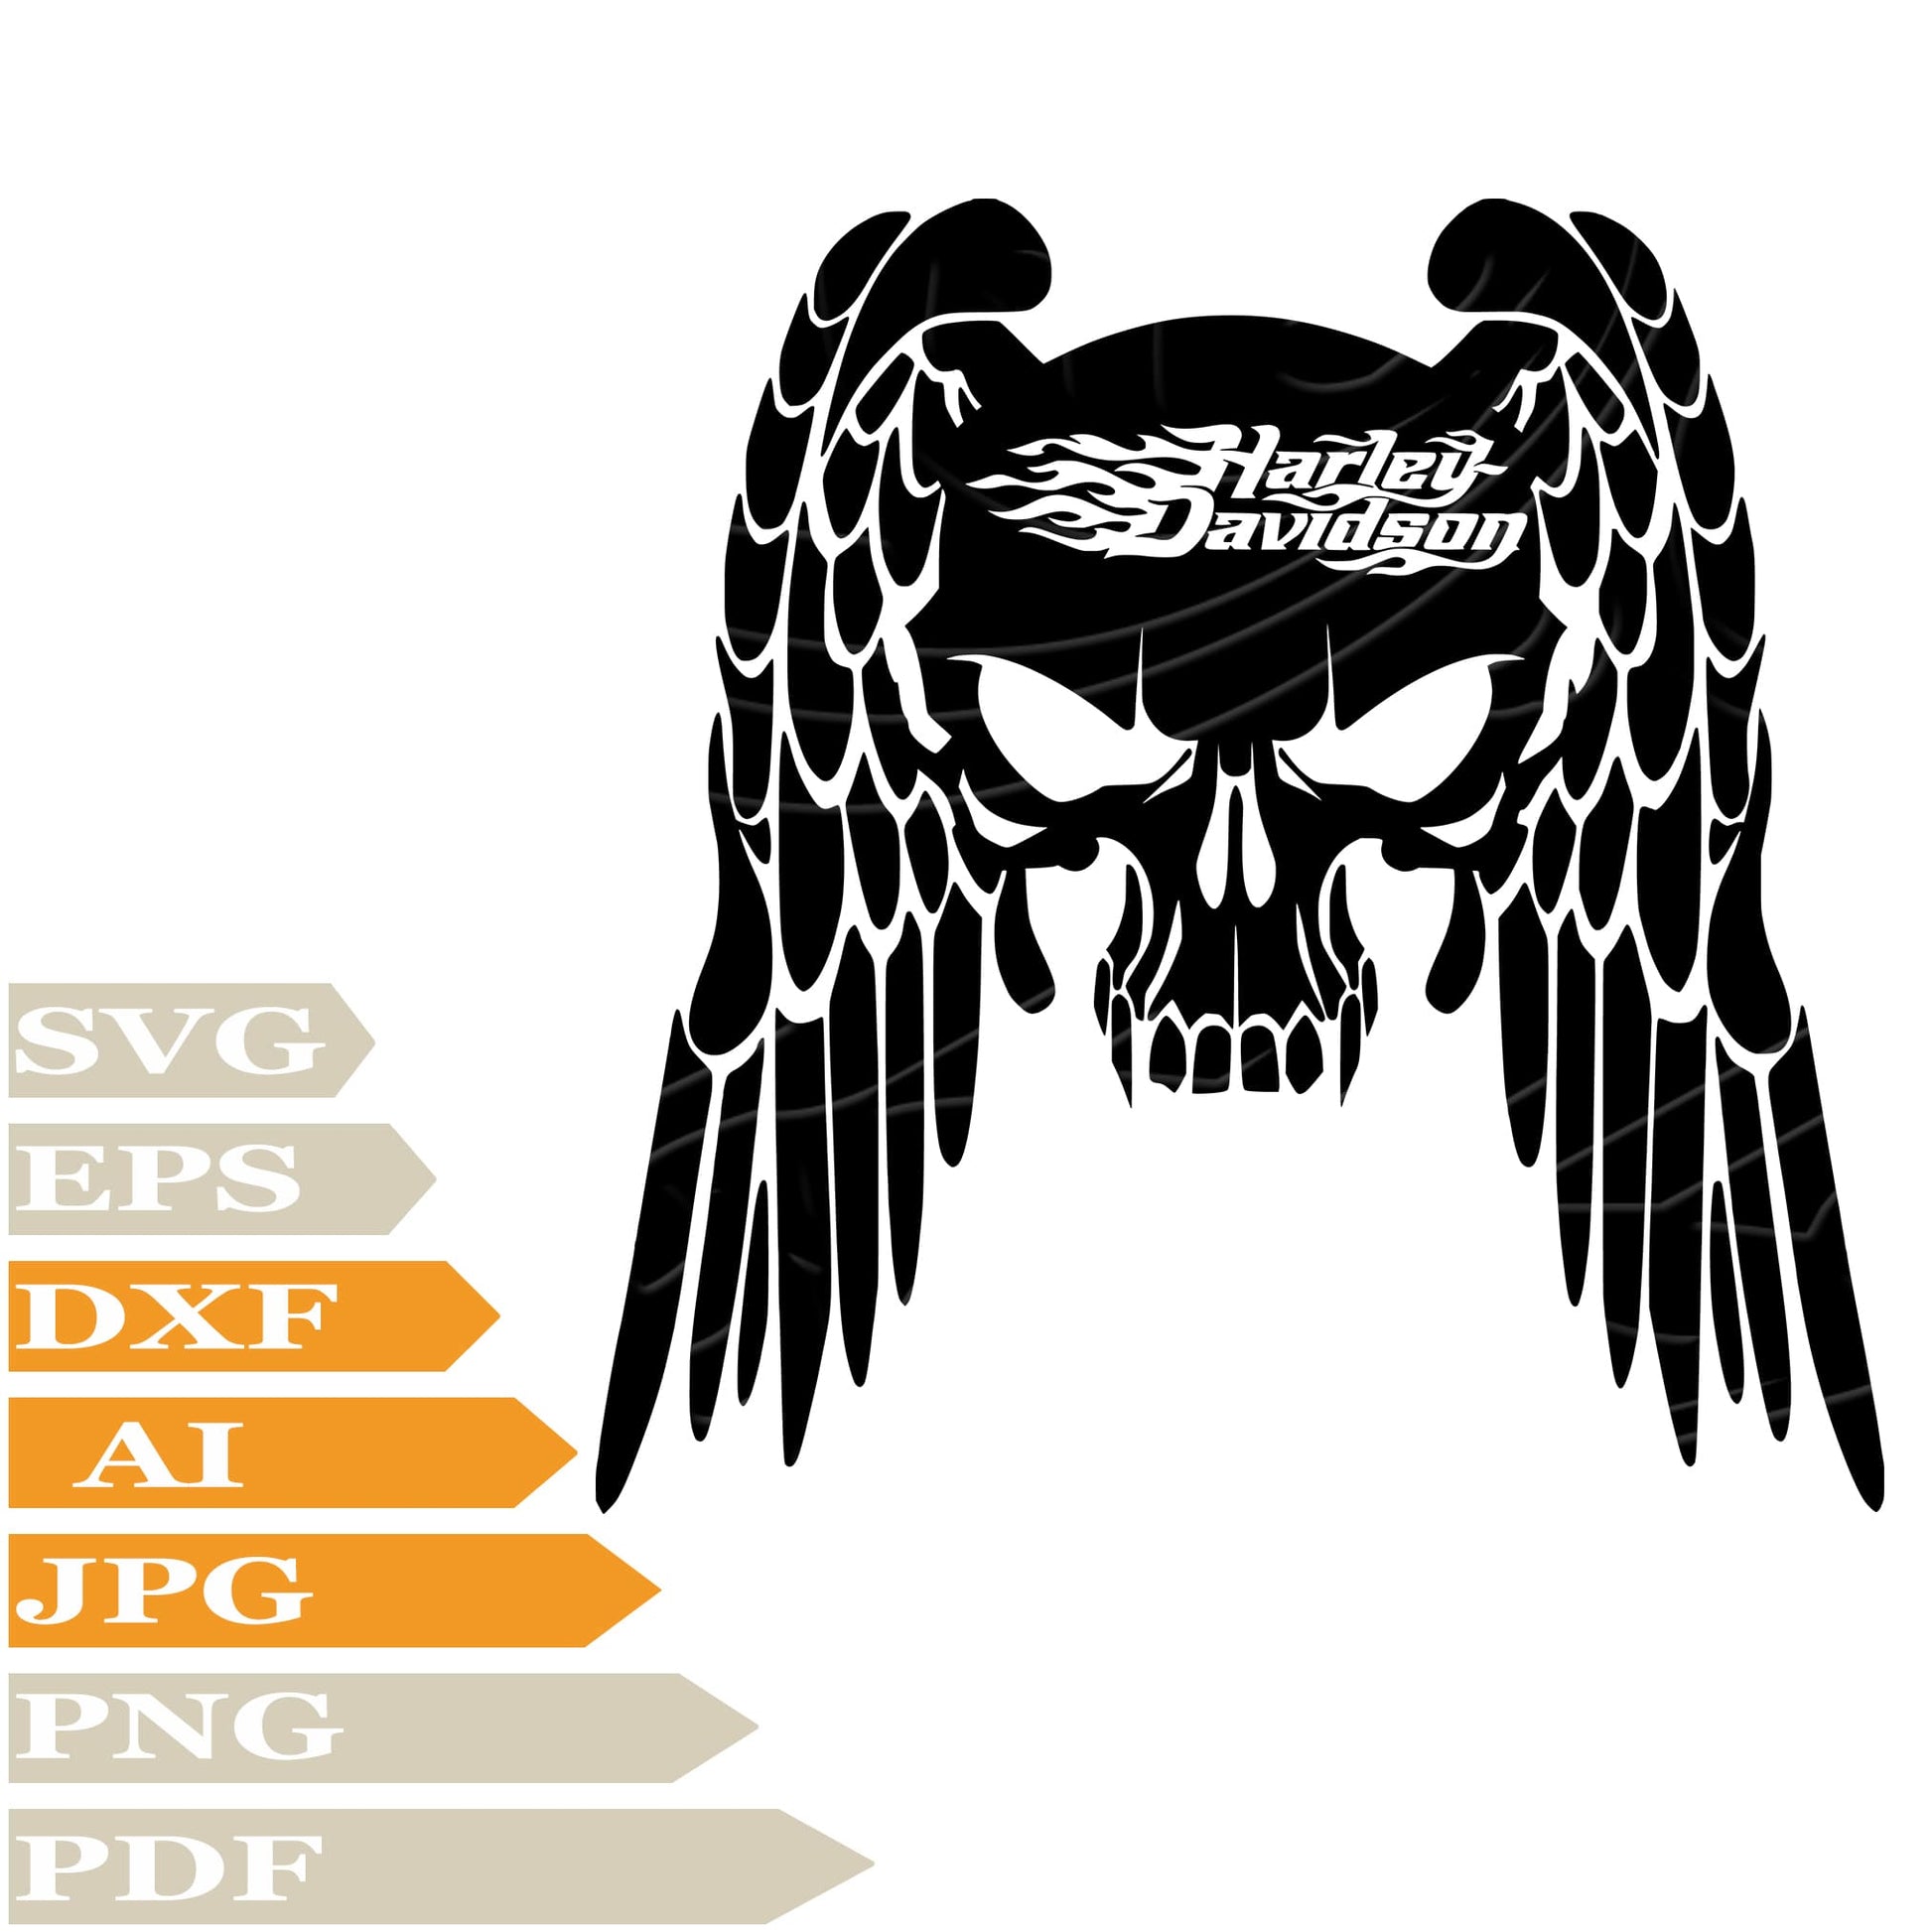 Skull With Wings SVG, Skull Harley Davidson SVG Design, Black Skull With Wings PNG, Harley Davidson Logo Vector Graphics, Black Skull Harley Davidson Digital Instant Download, Harley Davidson For Cricut, Clip Art, Cut File, T-Shirts, Silhouette